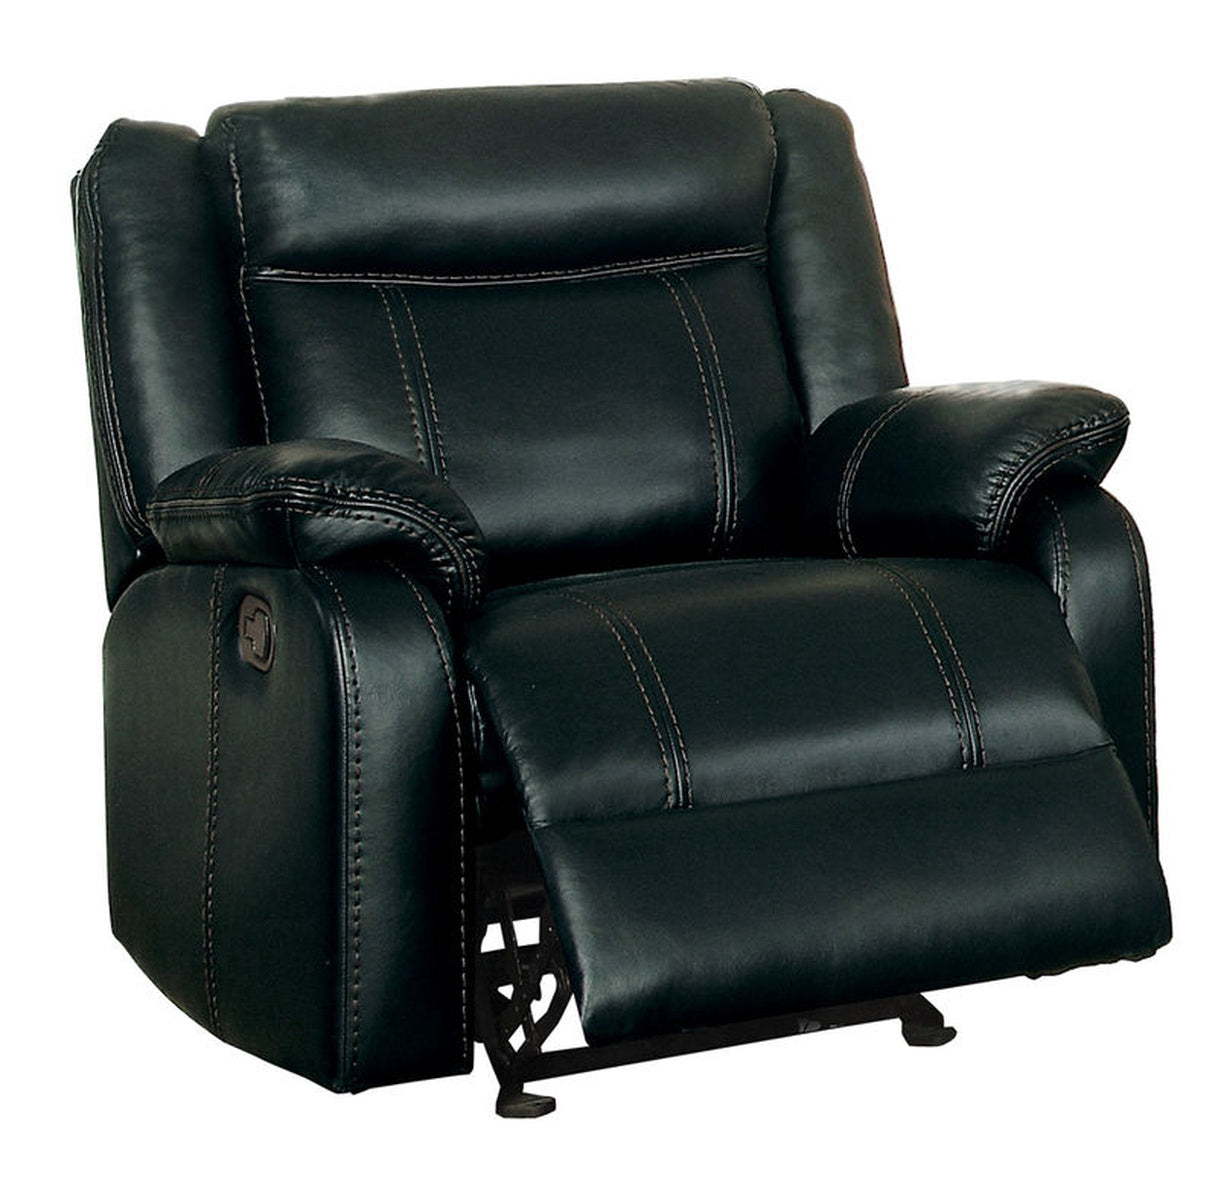 Homelegance Furniture Jude Glider Recliner Chair in Black 8201BLK-1 image